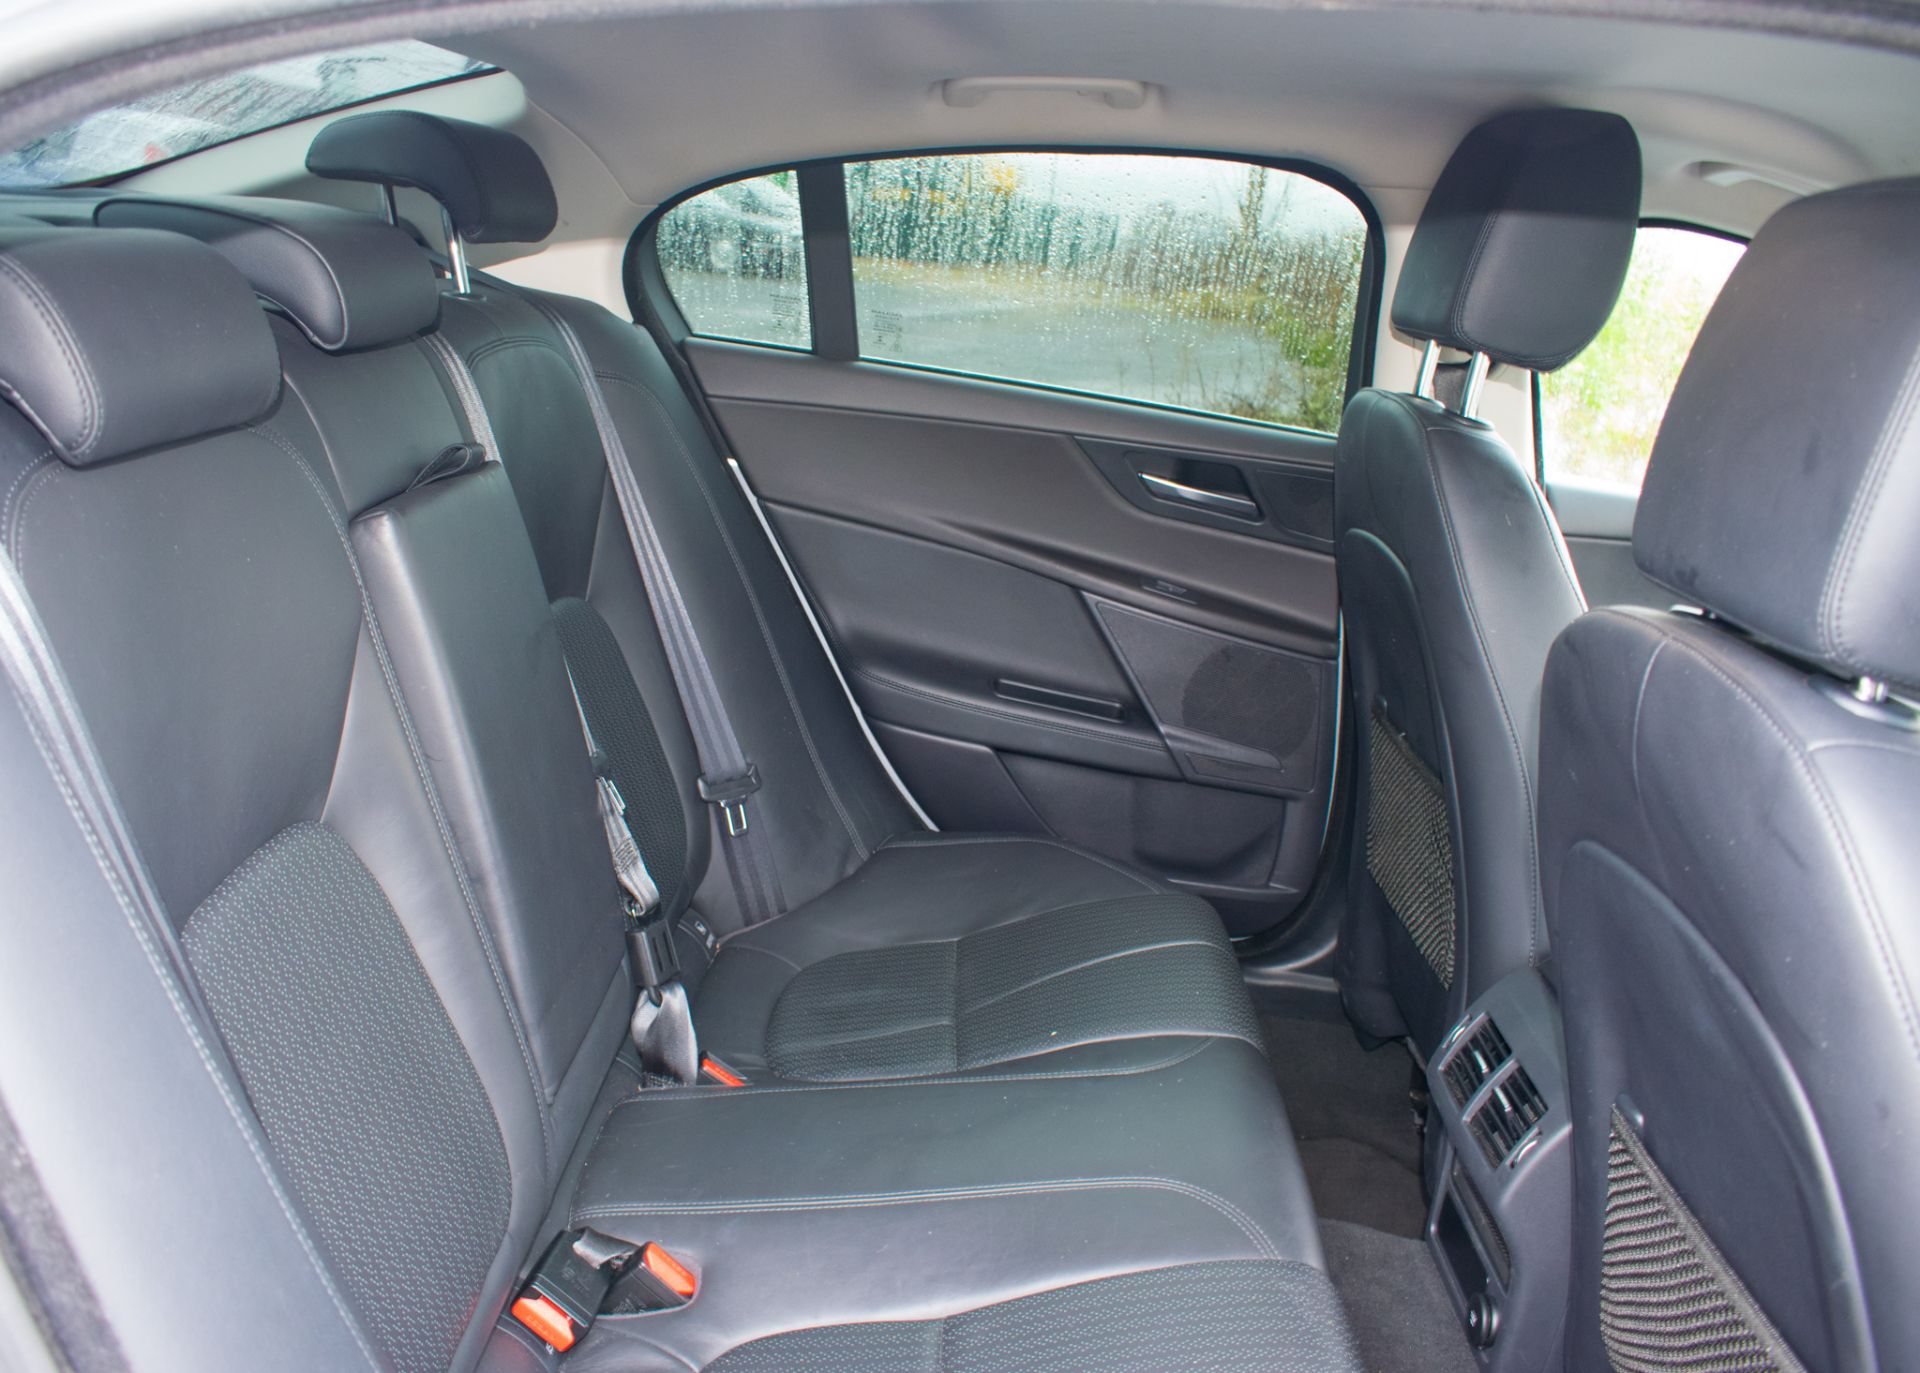 Jaguar XE Portfolio 2.0 litre petrol automatic 4 door saloon car Registration number: AV67 RPY - Image 19 of 23